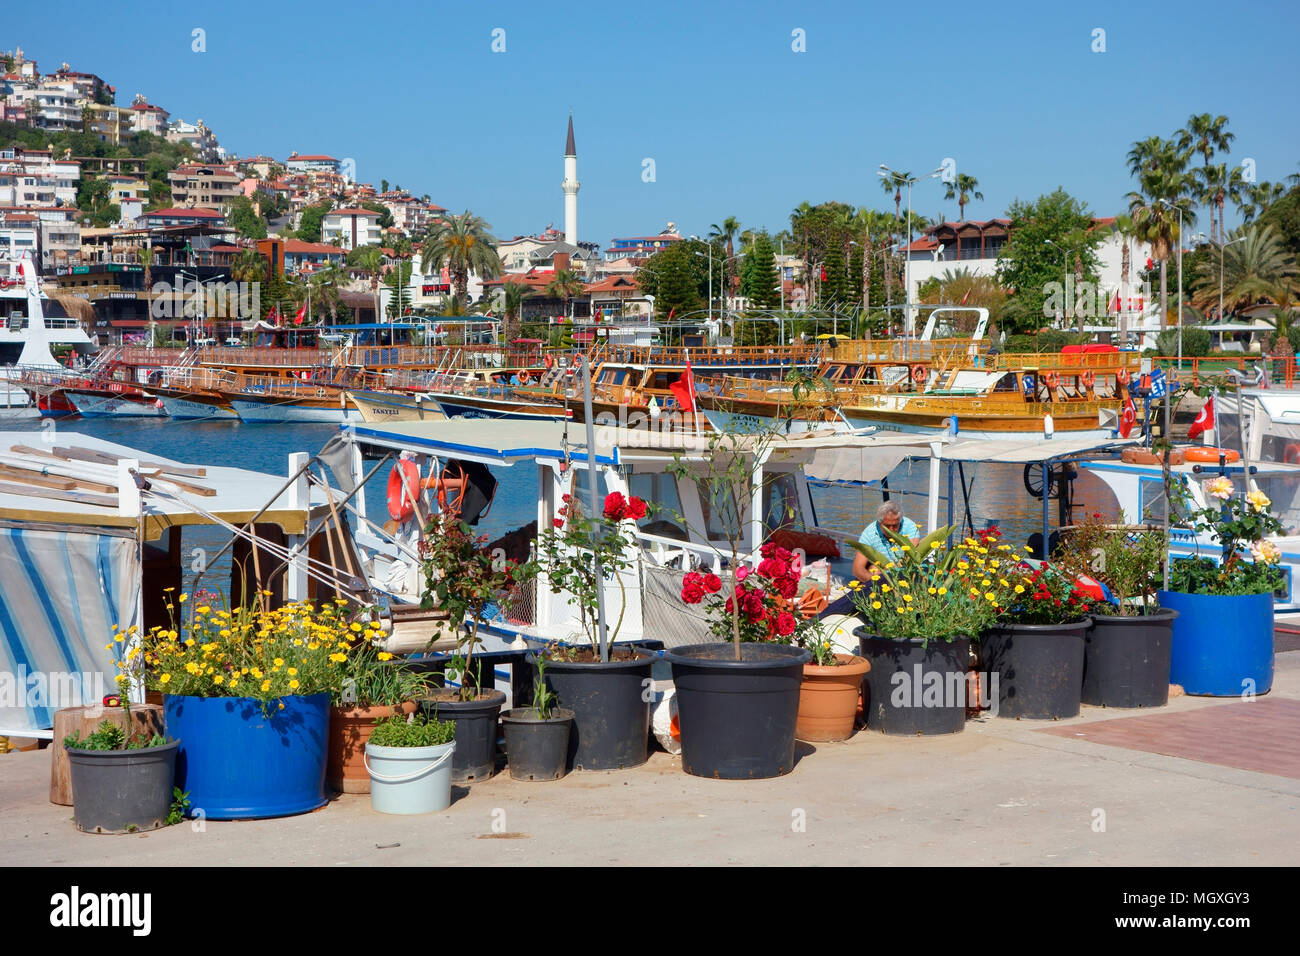 Boats in Alanya Harbour, Mediterranean, Turkey Stock Photo